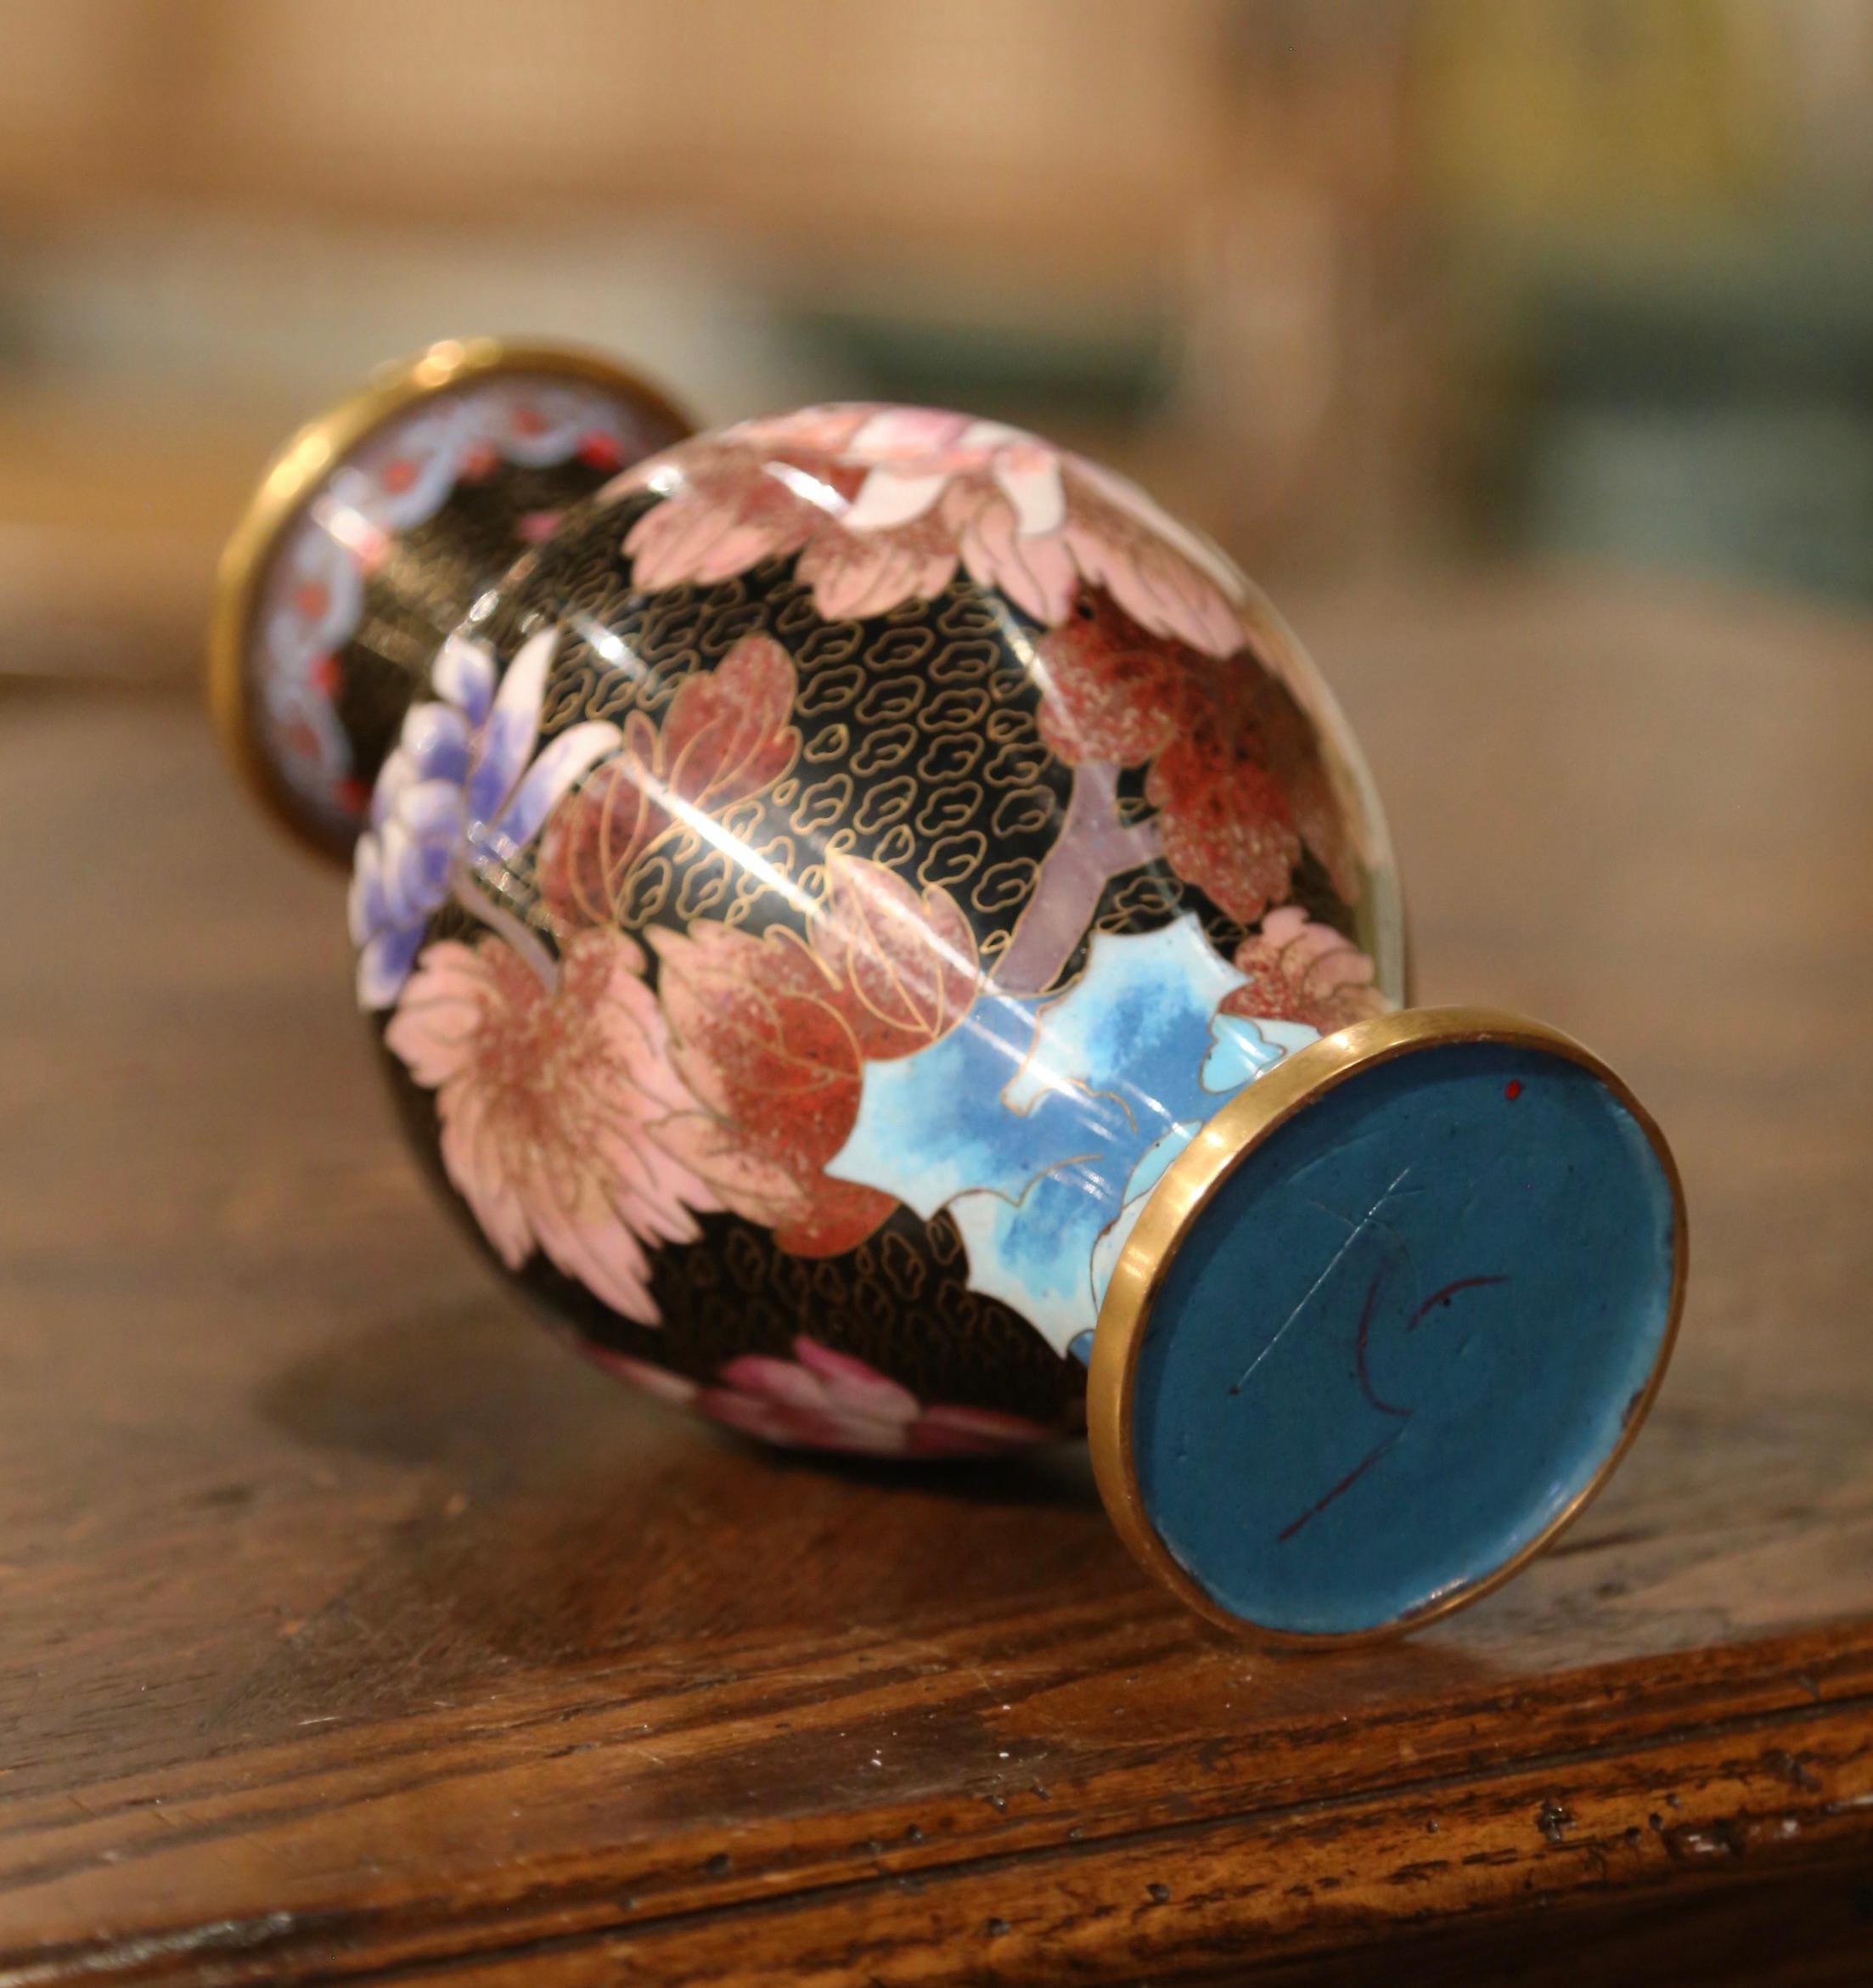  Vintage Chinese Cloisonne Enamel Vase with Floral and Leaf Motifs  For Sale 2